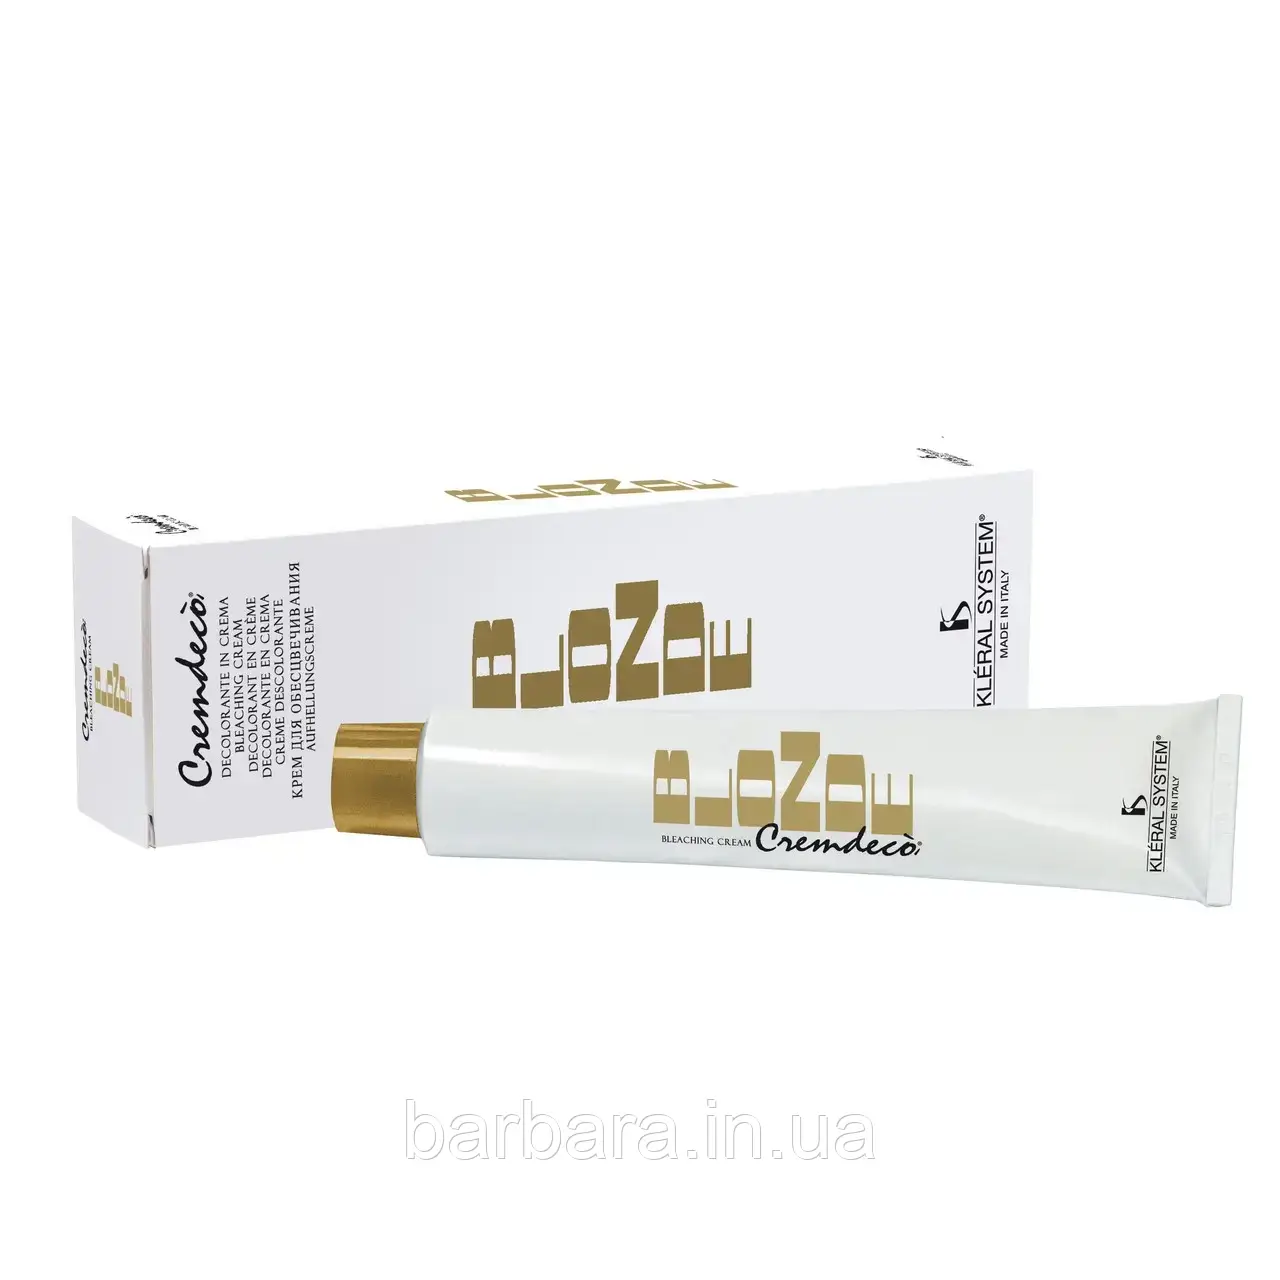 Освітлюючий безамічний крем для волосся КLERAL SYSTEM Cremdeco Blonde Bleaching Cream  250 мл